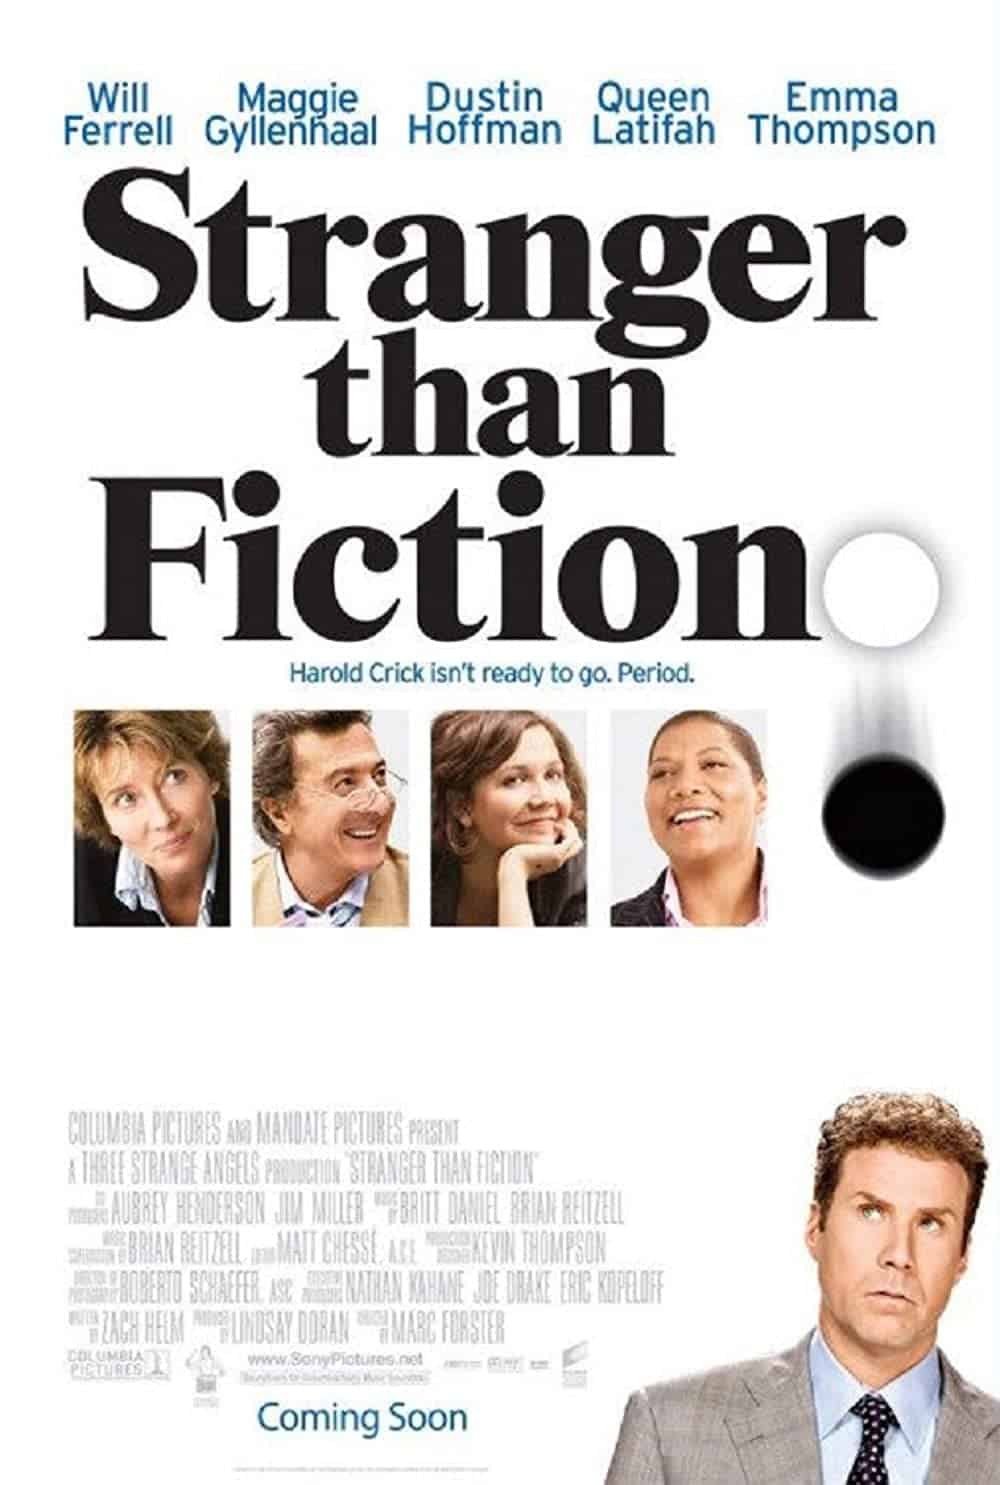 Fight Club similar movie Stranger than Fiction (2006)